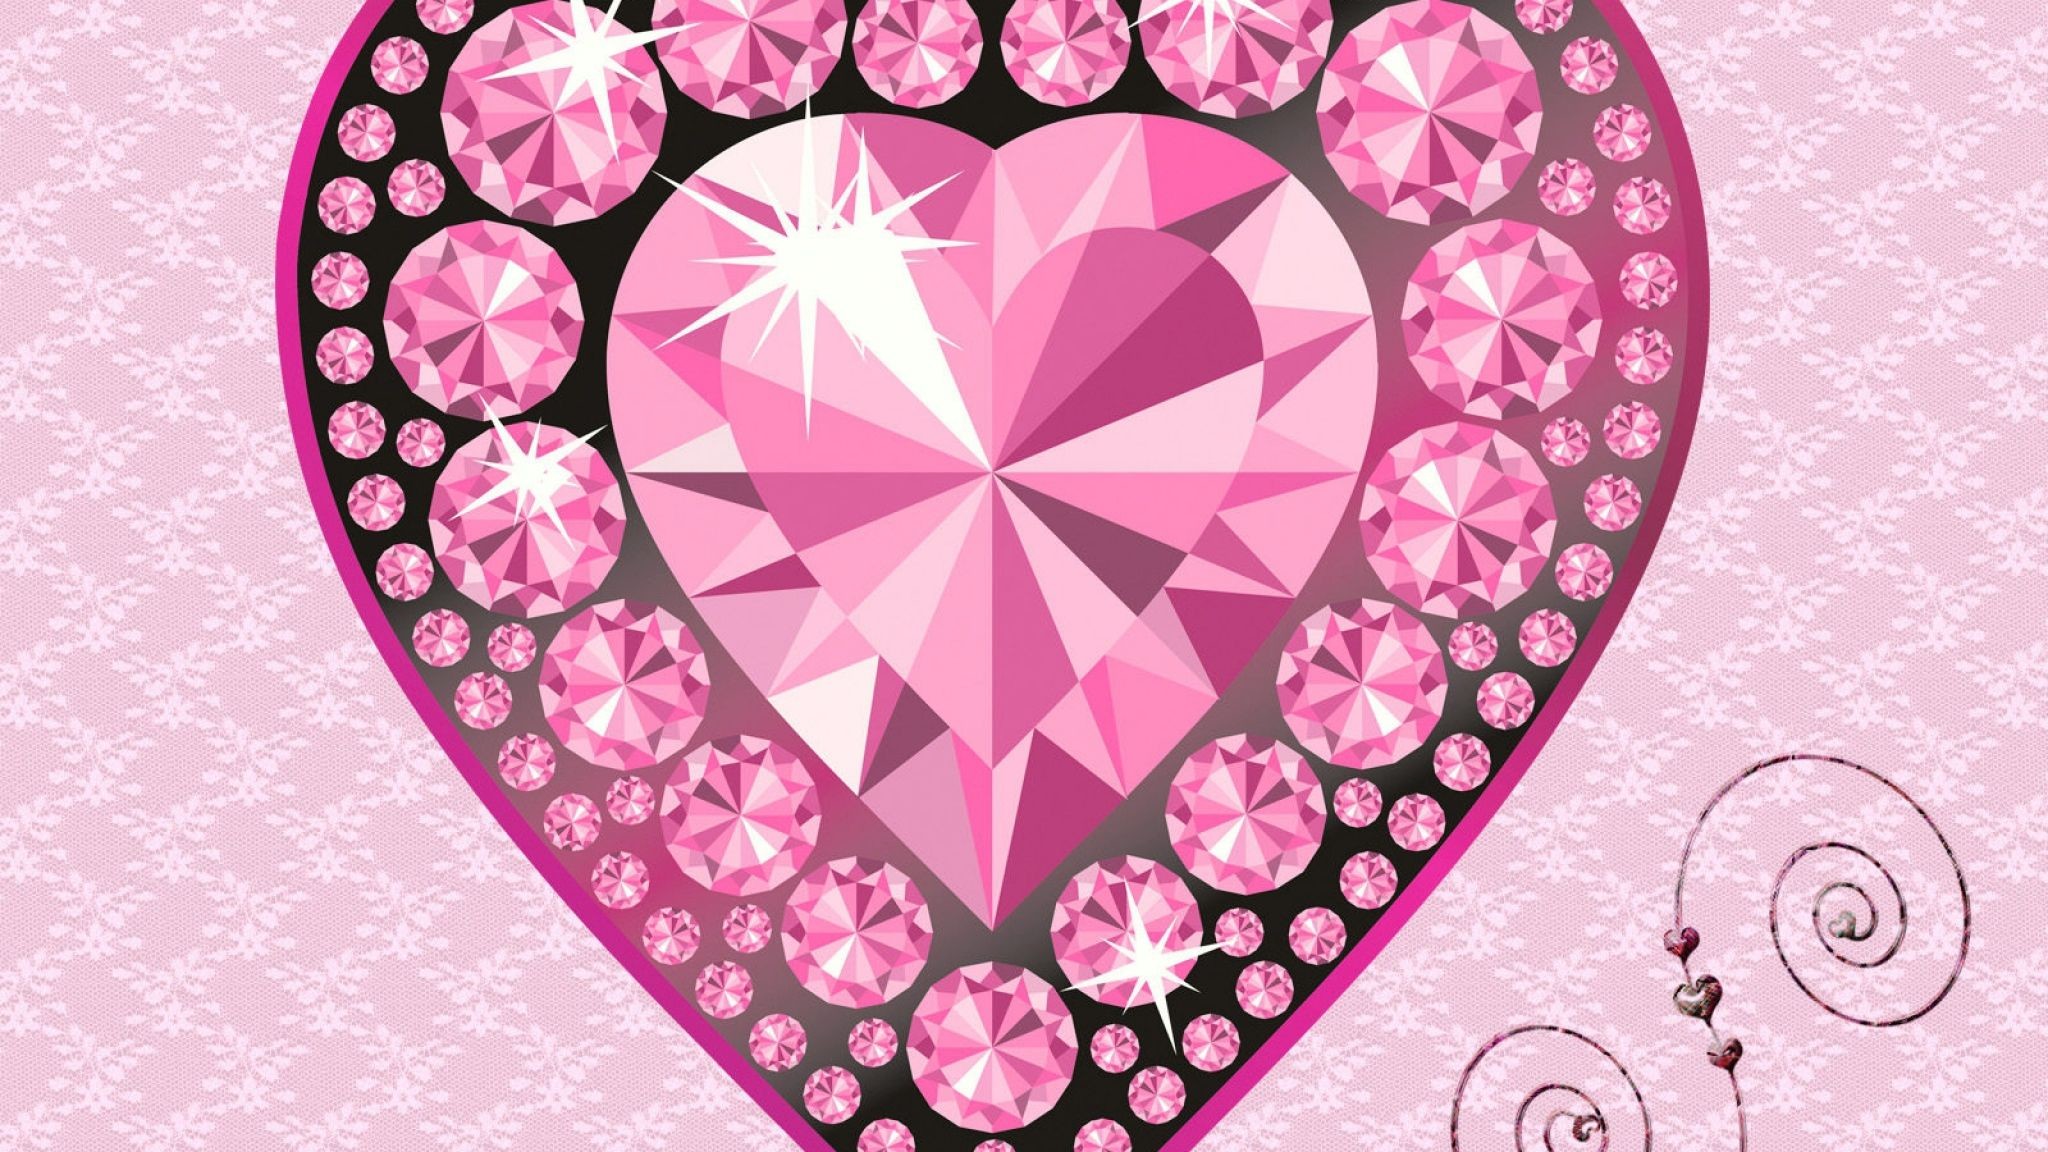 2048x1152 Widescreen-Diamond-Wallpaper-Cool-Image-Pink-Picture.jpg